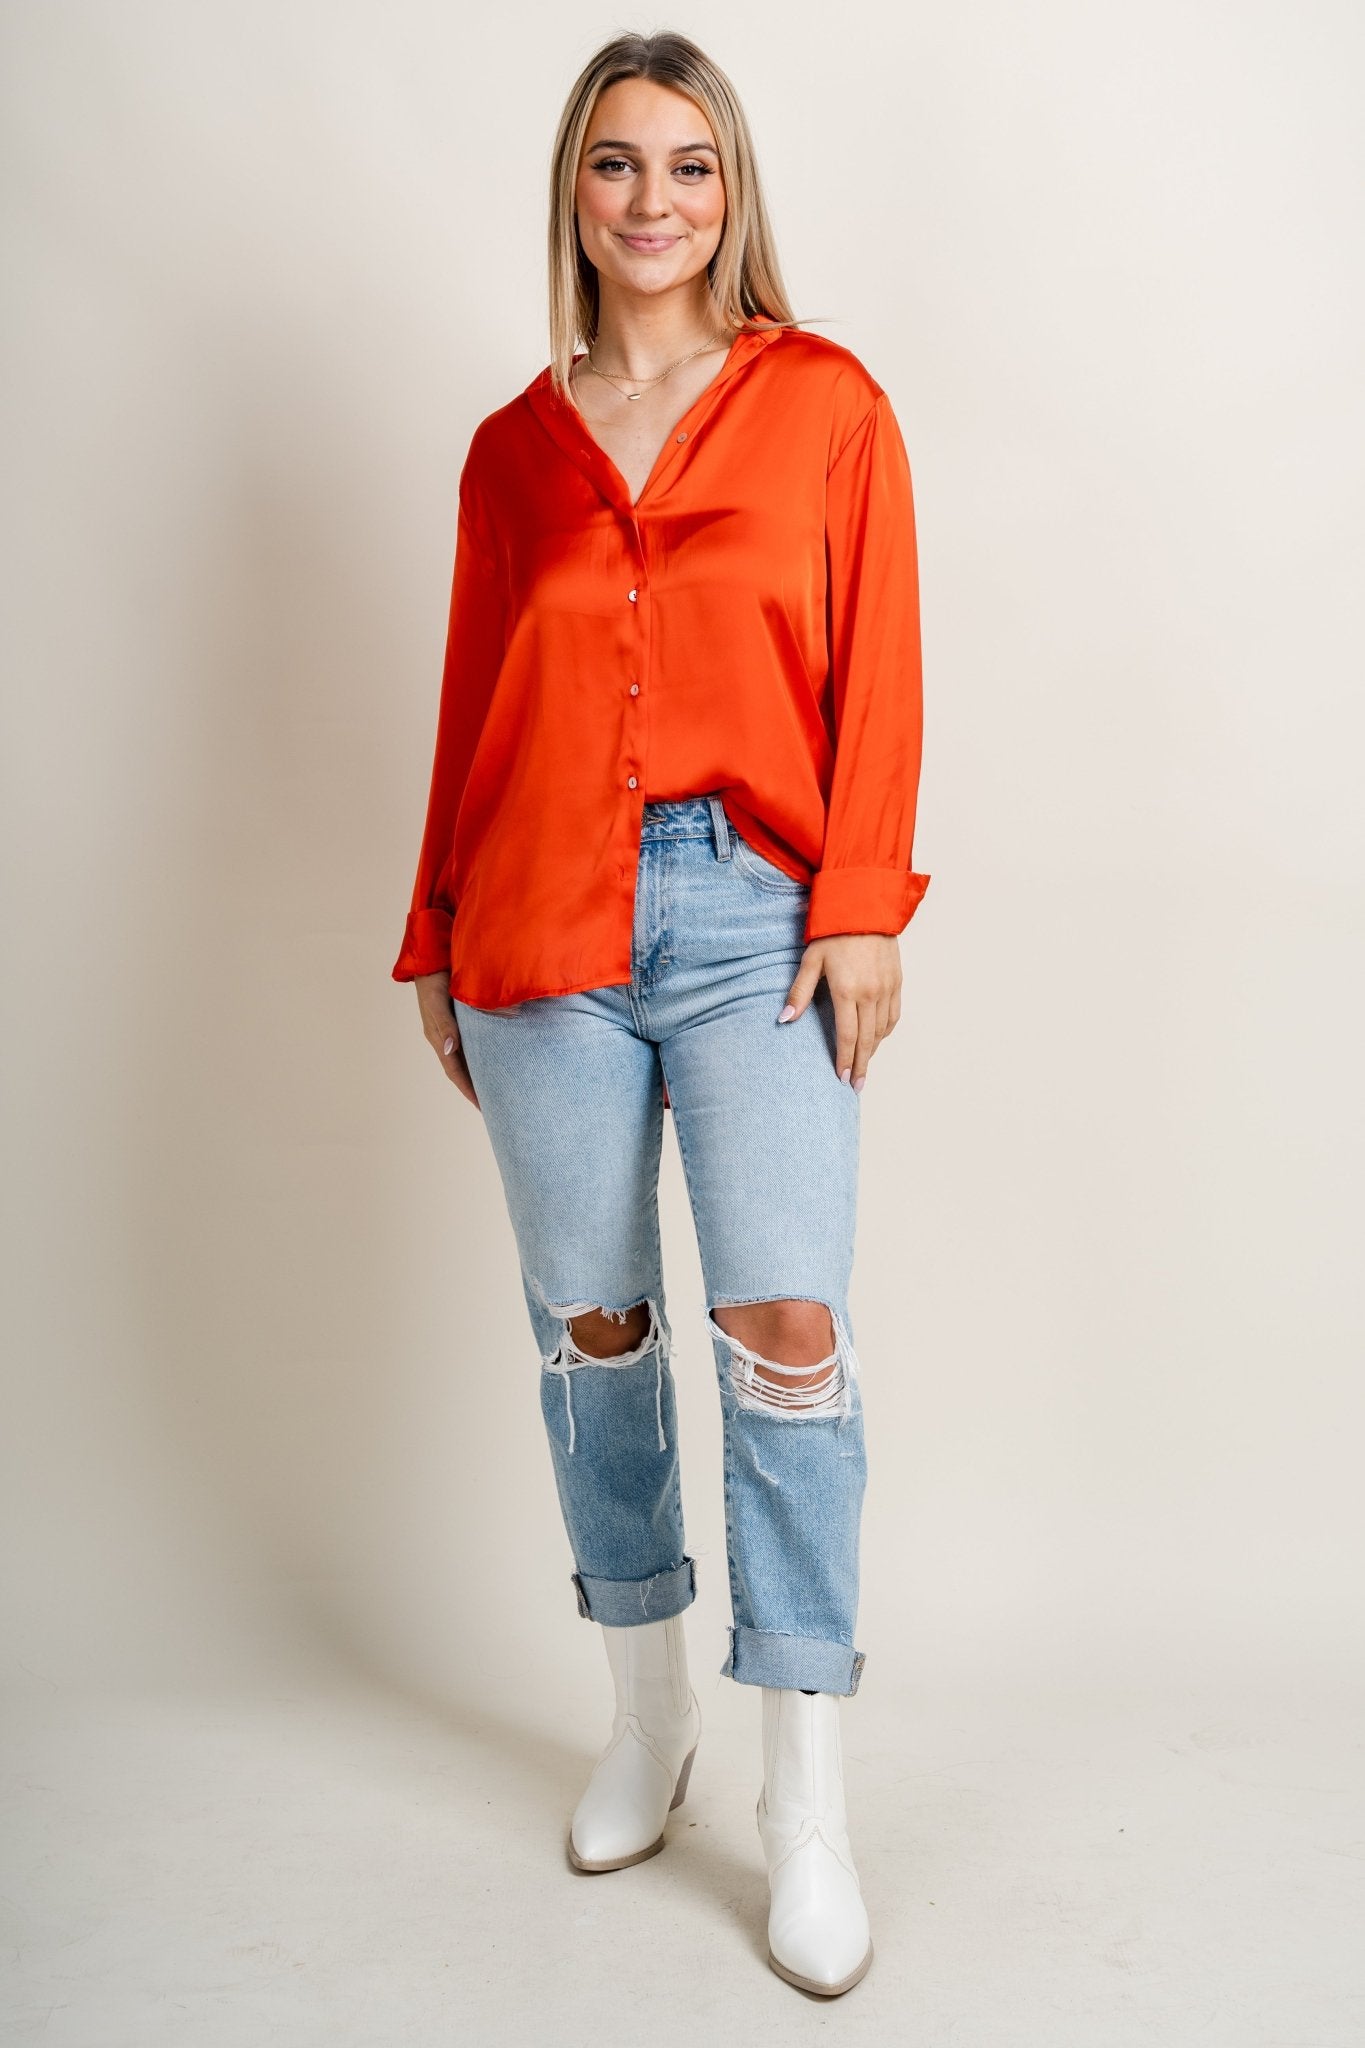 OSU Satin button down top orange Top | Lush Fashion Lounge Trendy Oklahoma State Cowboys Apparel & Cute Gameday T-Shirts